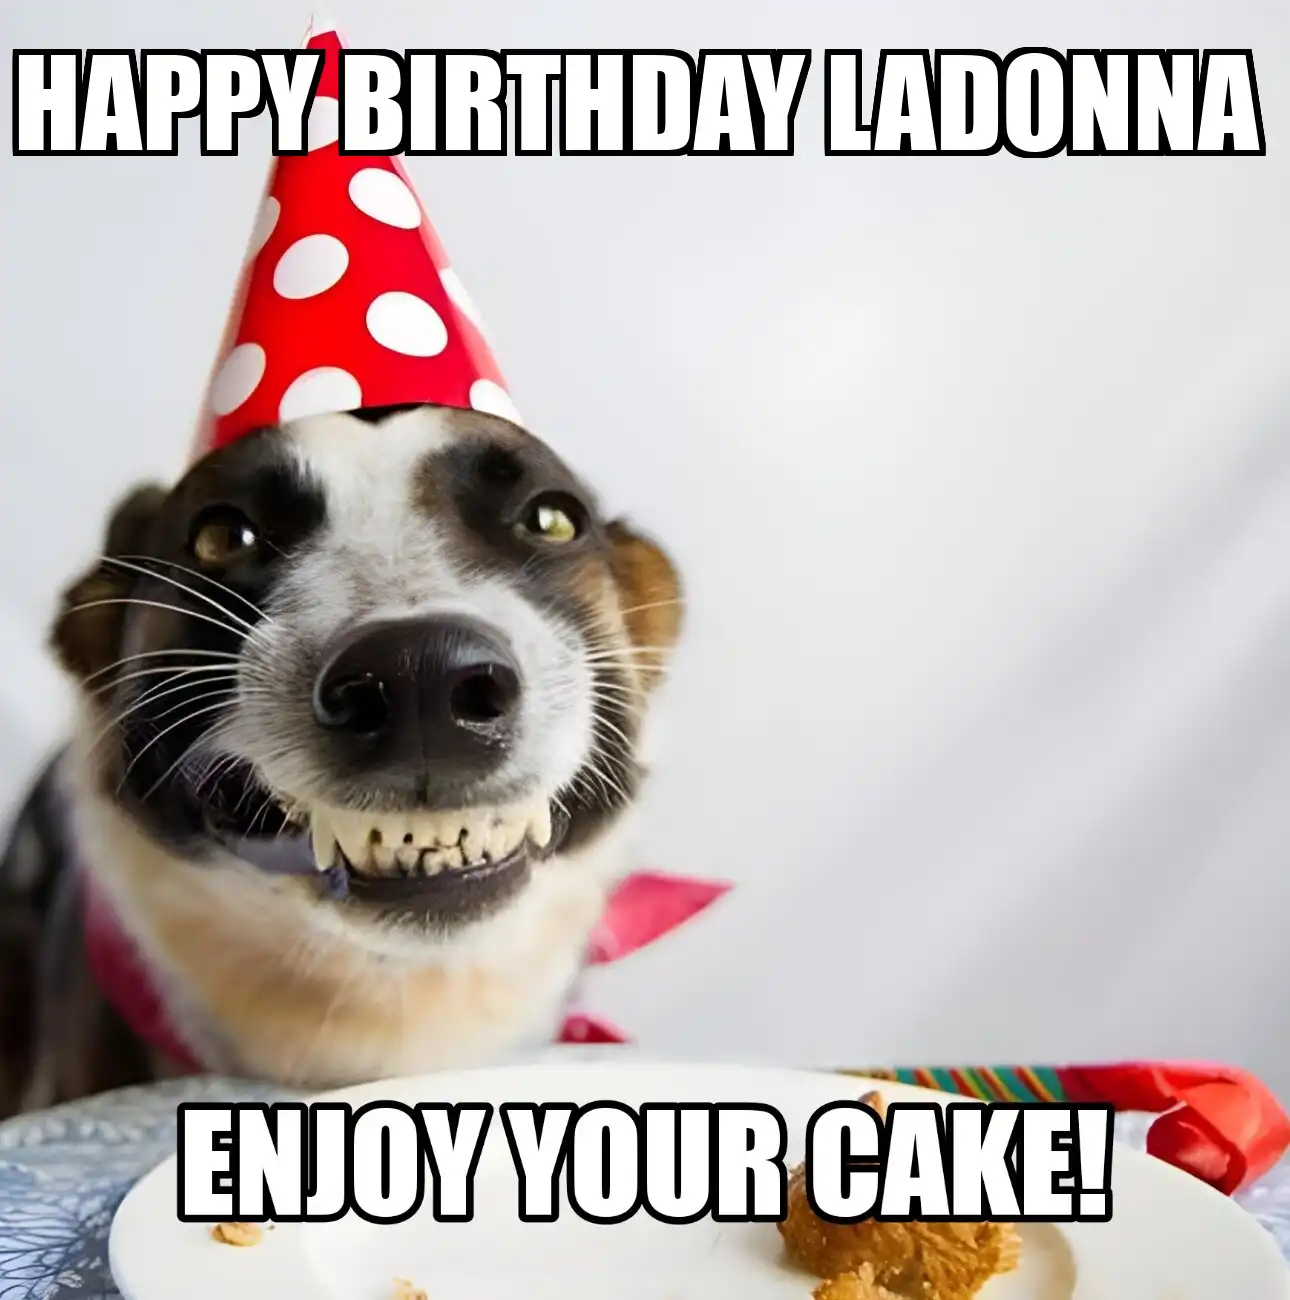 Happy Birthday Ladonna Enjoy Your Cake Dog Meme